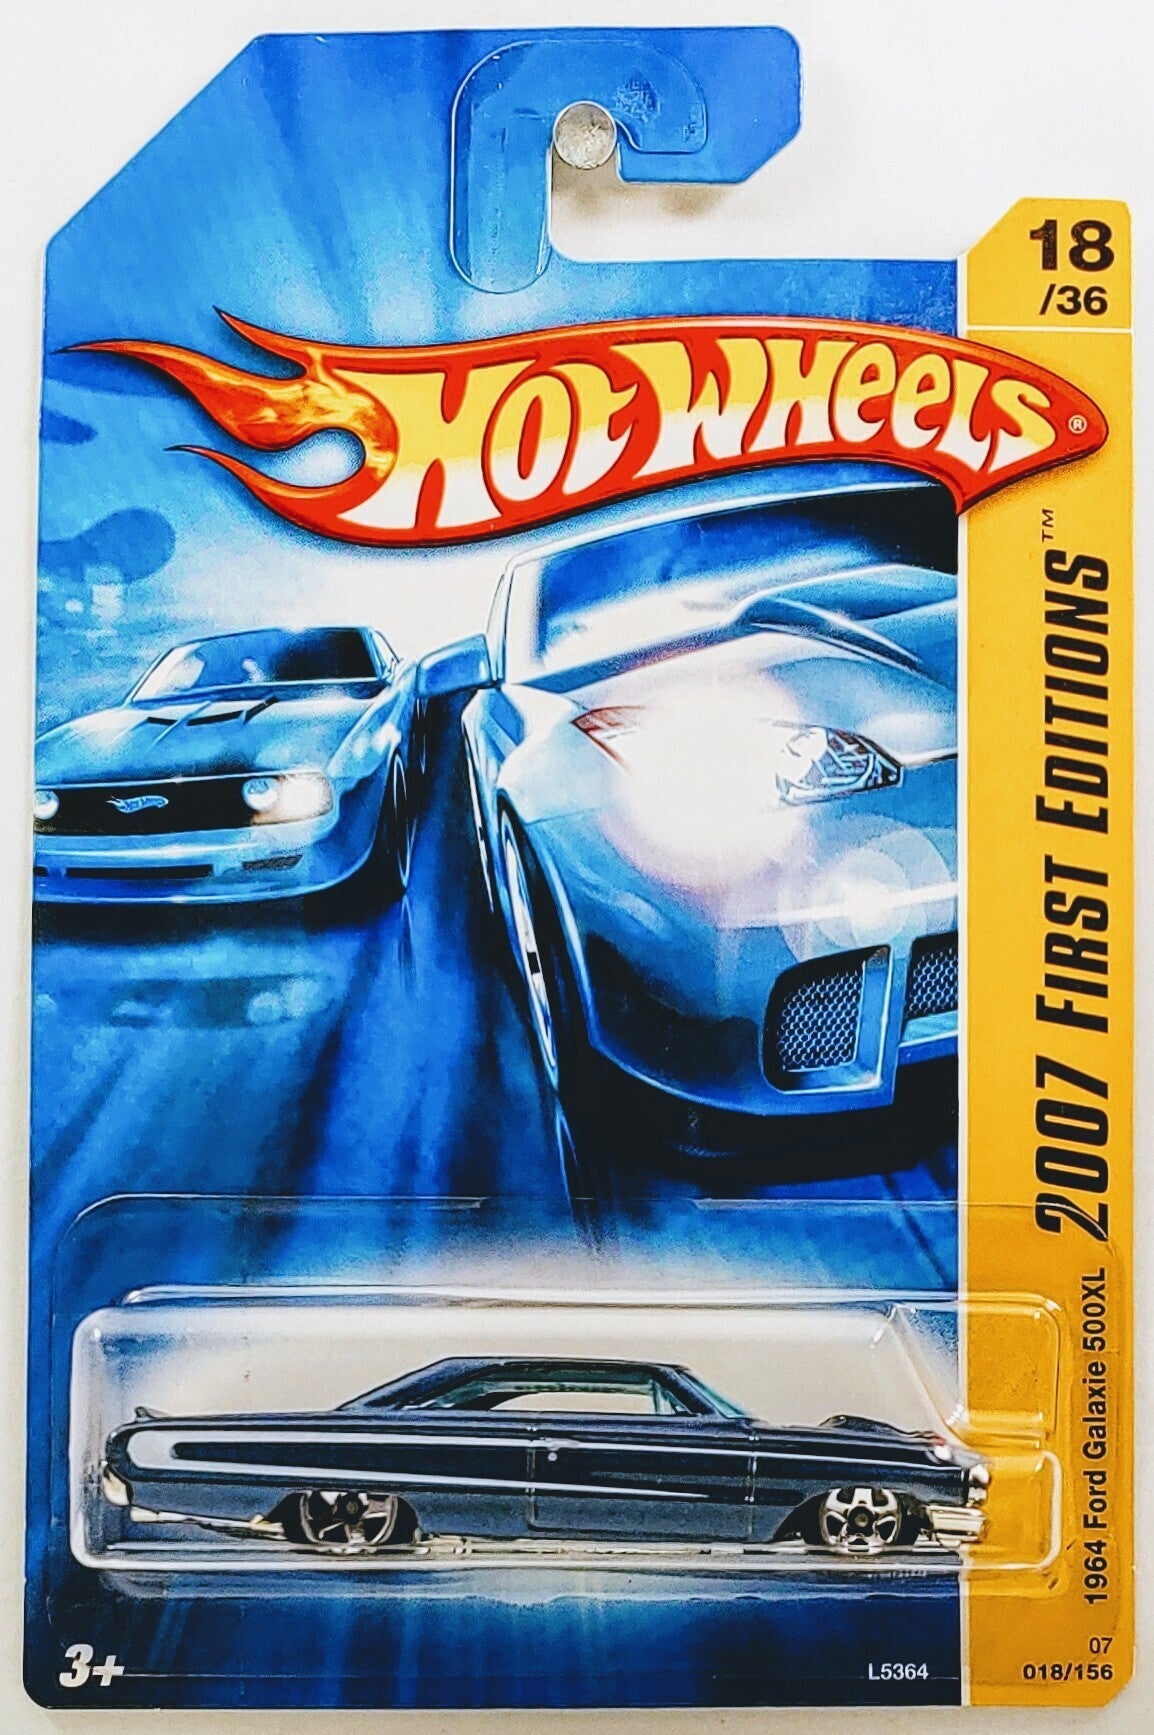 Hot Wheels 2007 - Collector # 018/156 - First Editions 18/36 - 1964 Ford Galaxie 500XL - Metallic Dark Blue - International Card